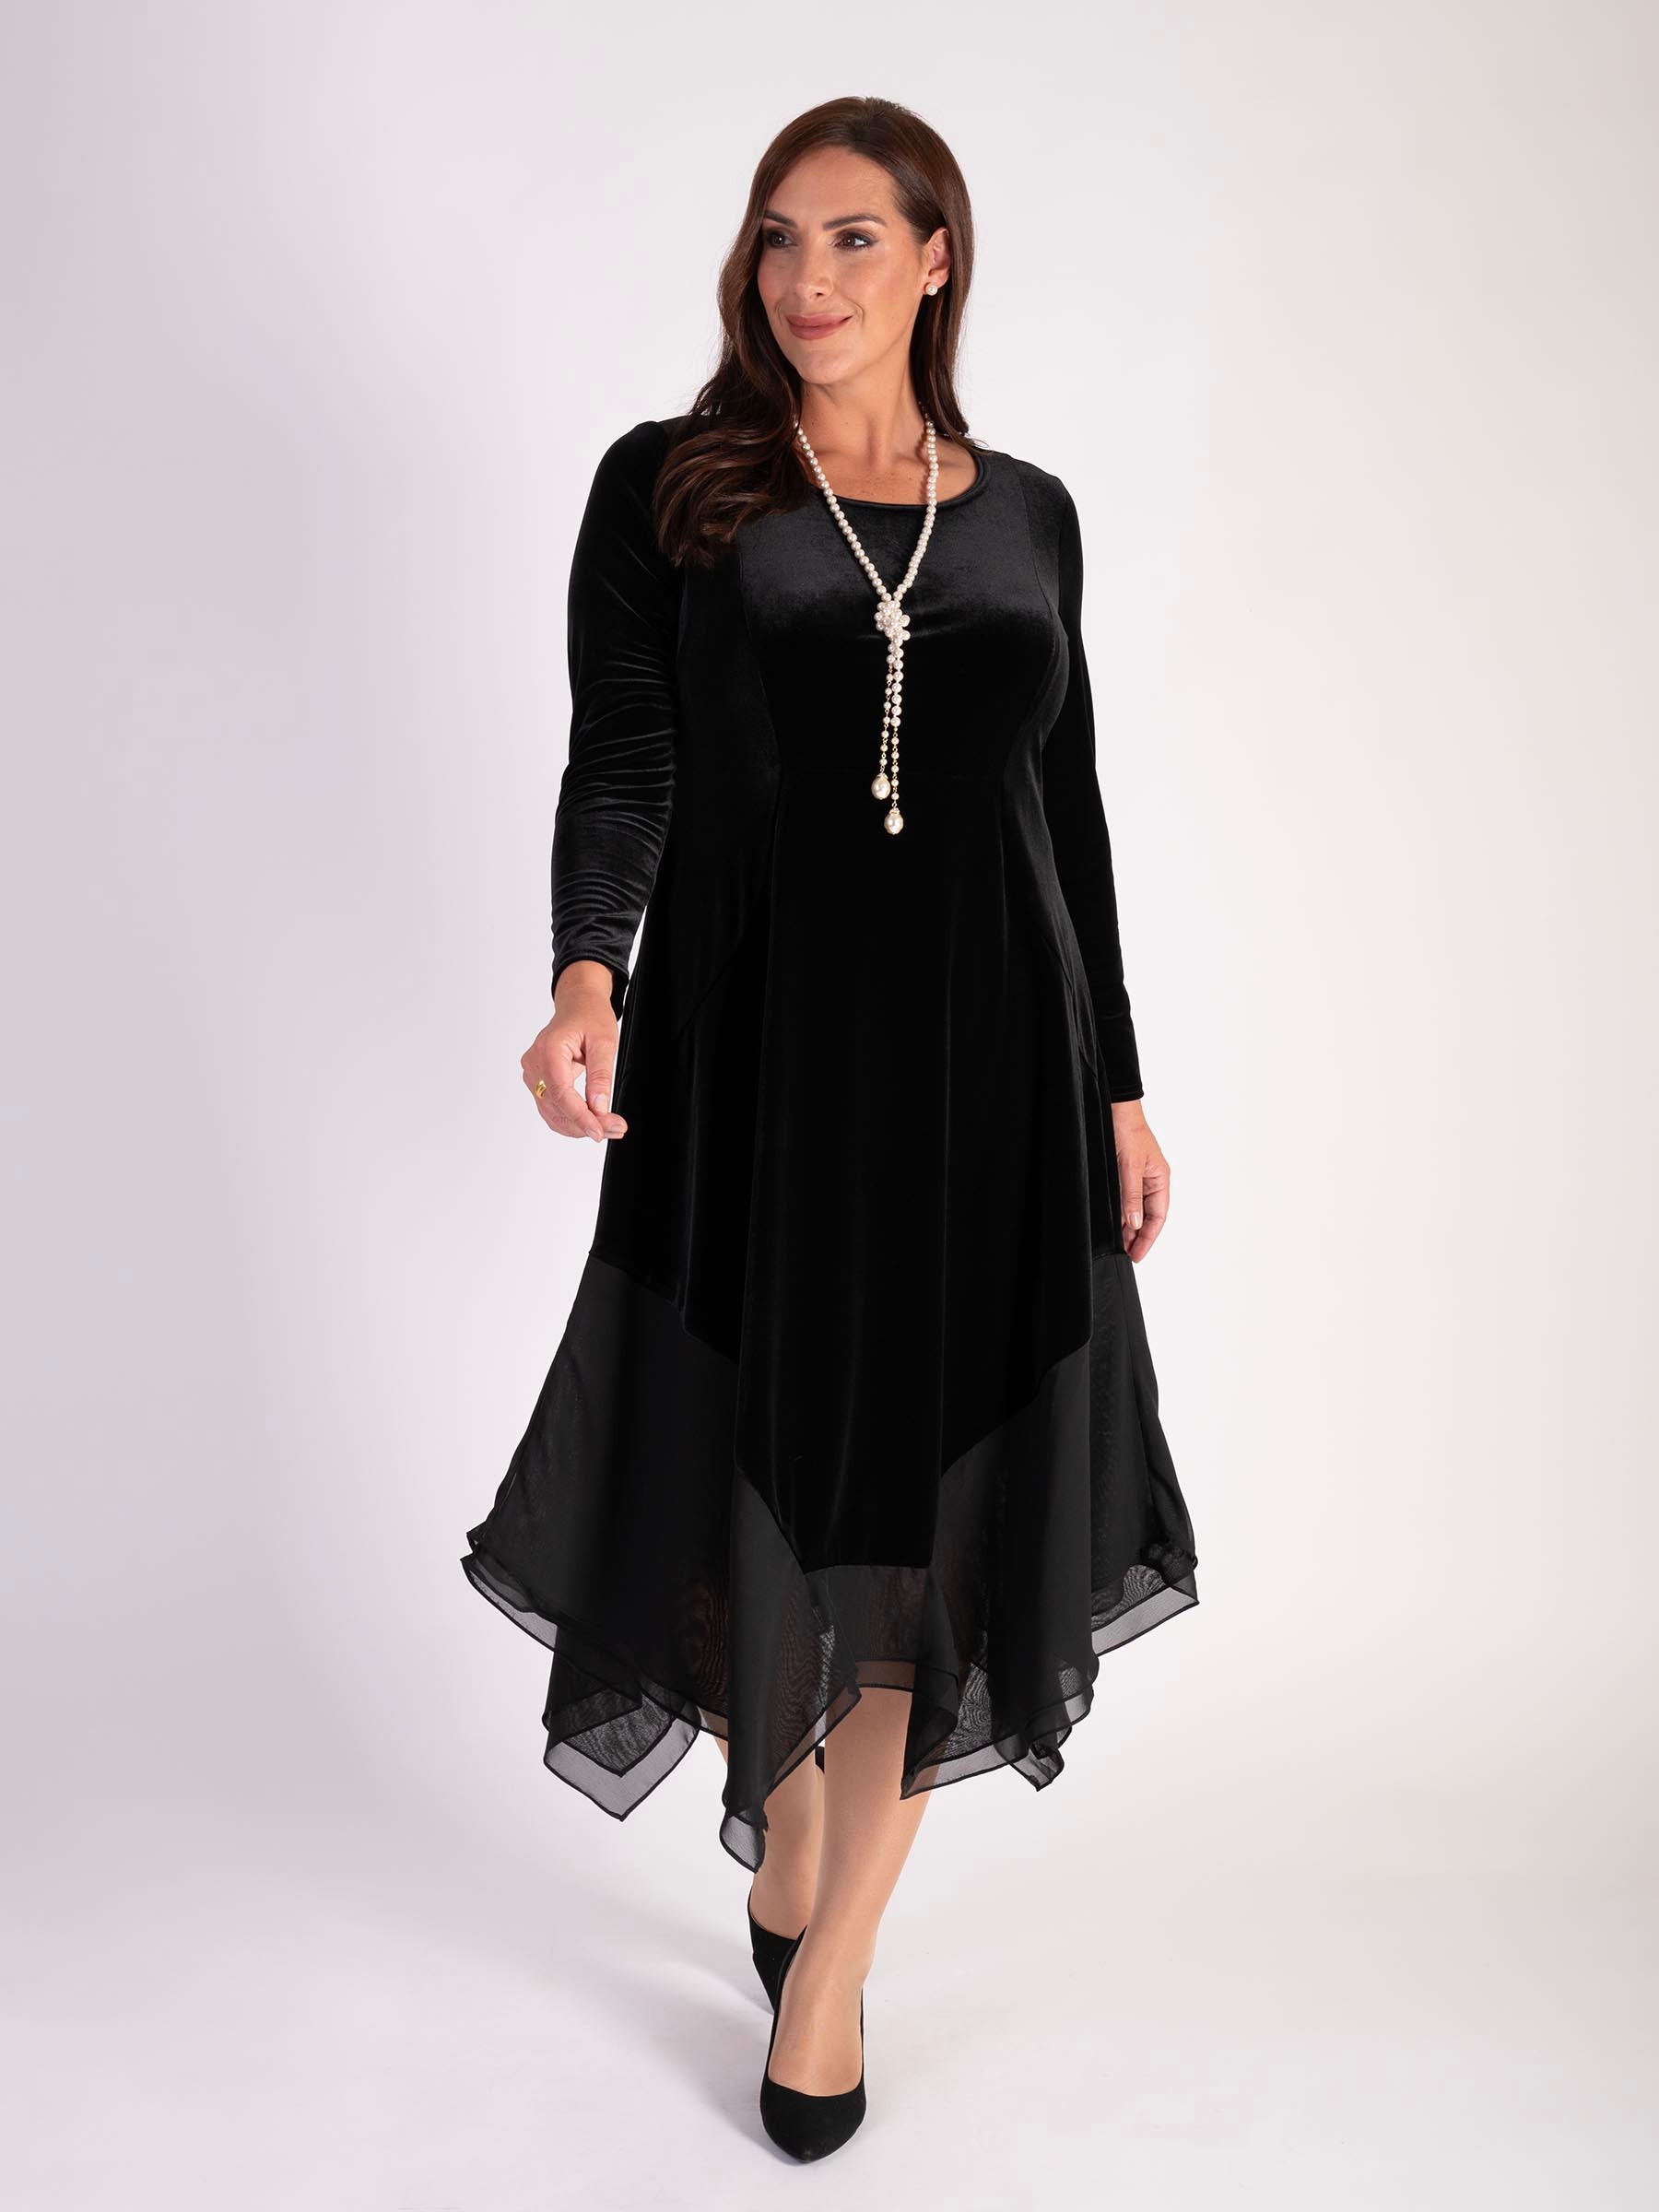 Black Stretch Velvet Drape Dress with Chiffon Trim